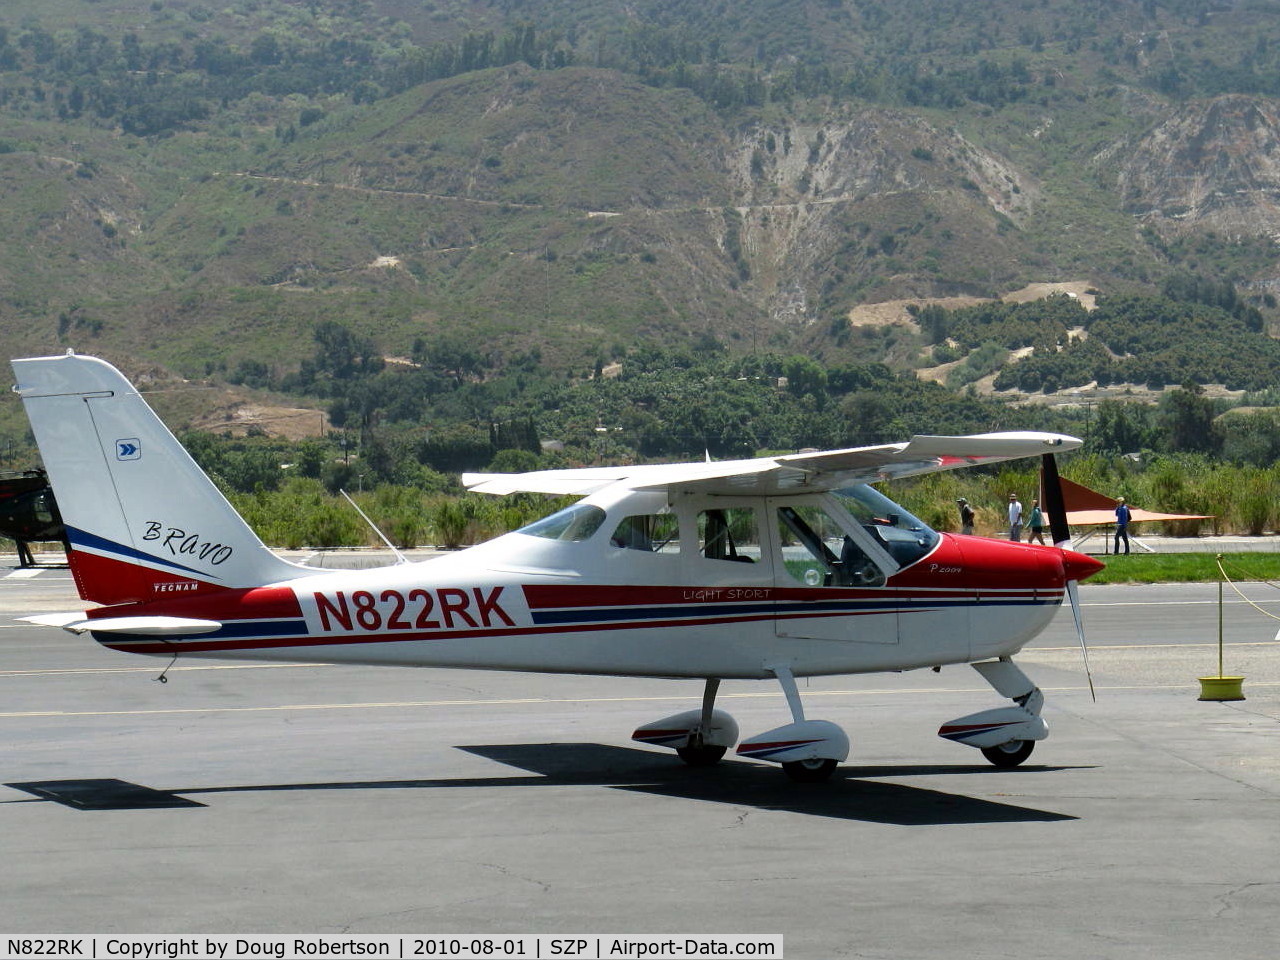 N822RK, 2007 Tecnam P-2004 Bravo C/N 096, 2007 Costruzioni Aeronautiche Tecnam P2004 BRAVO, Rotax 912ULS 100 Hp, refueling